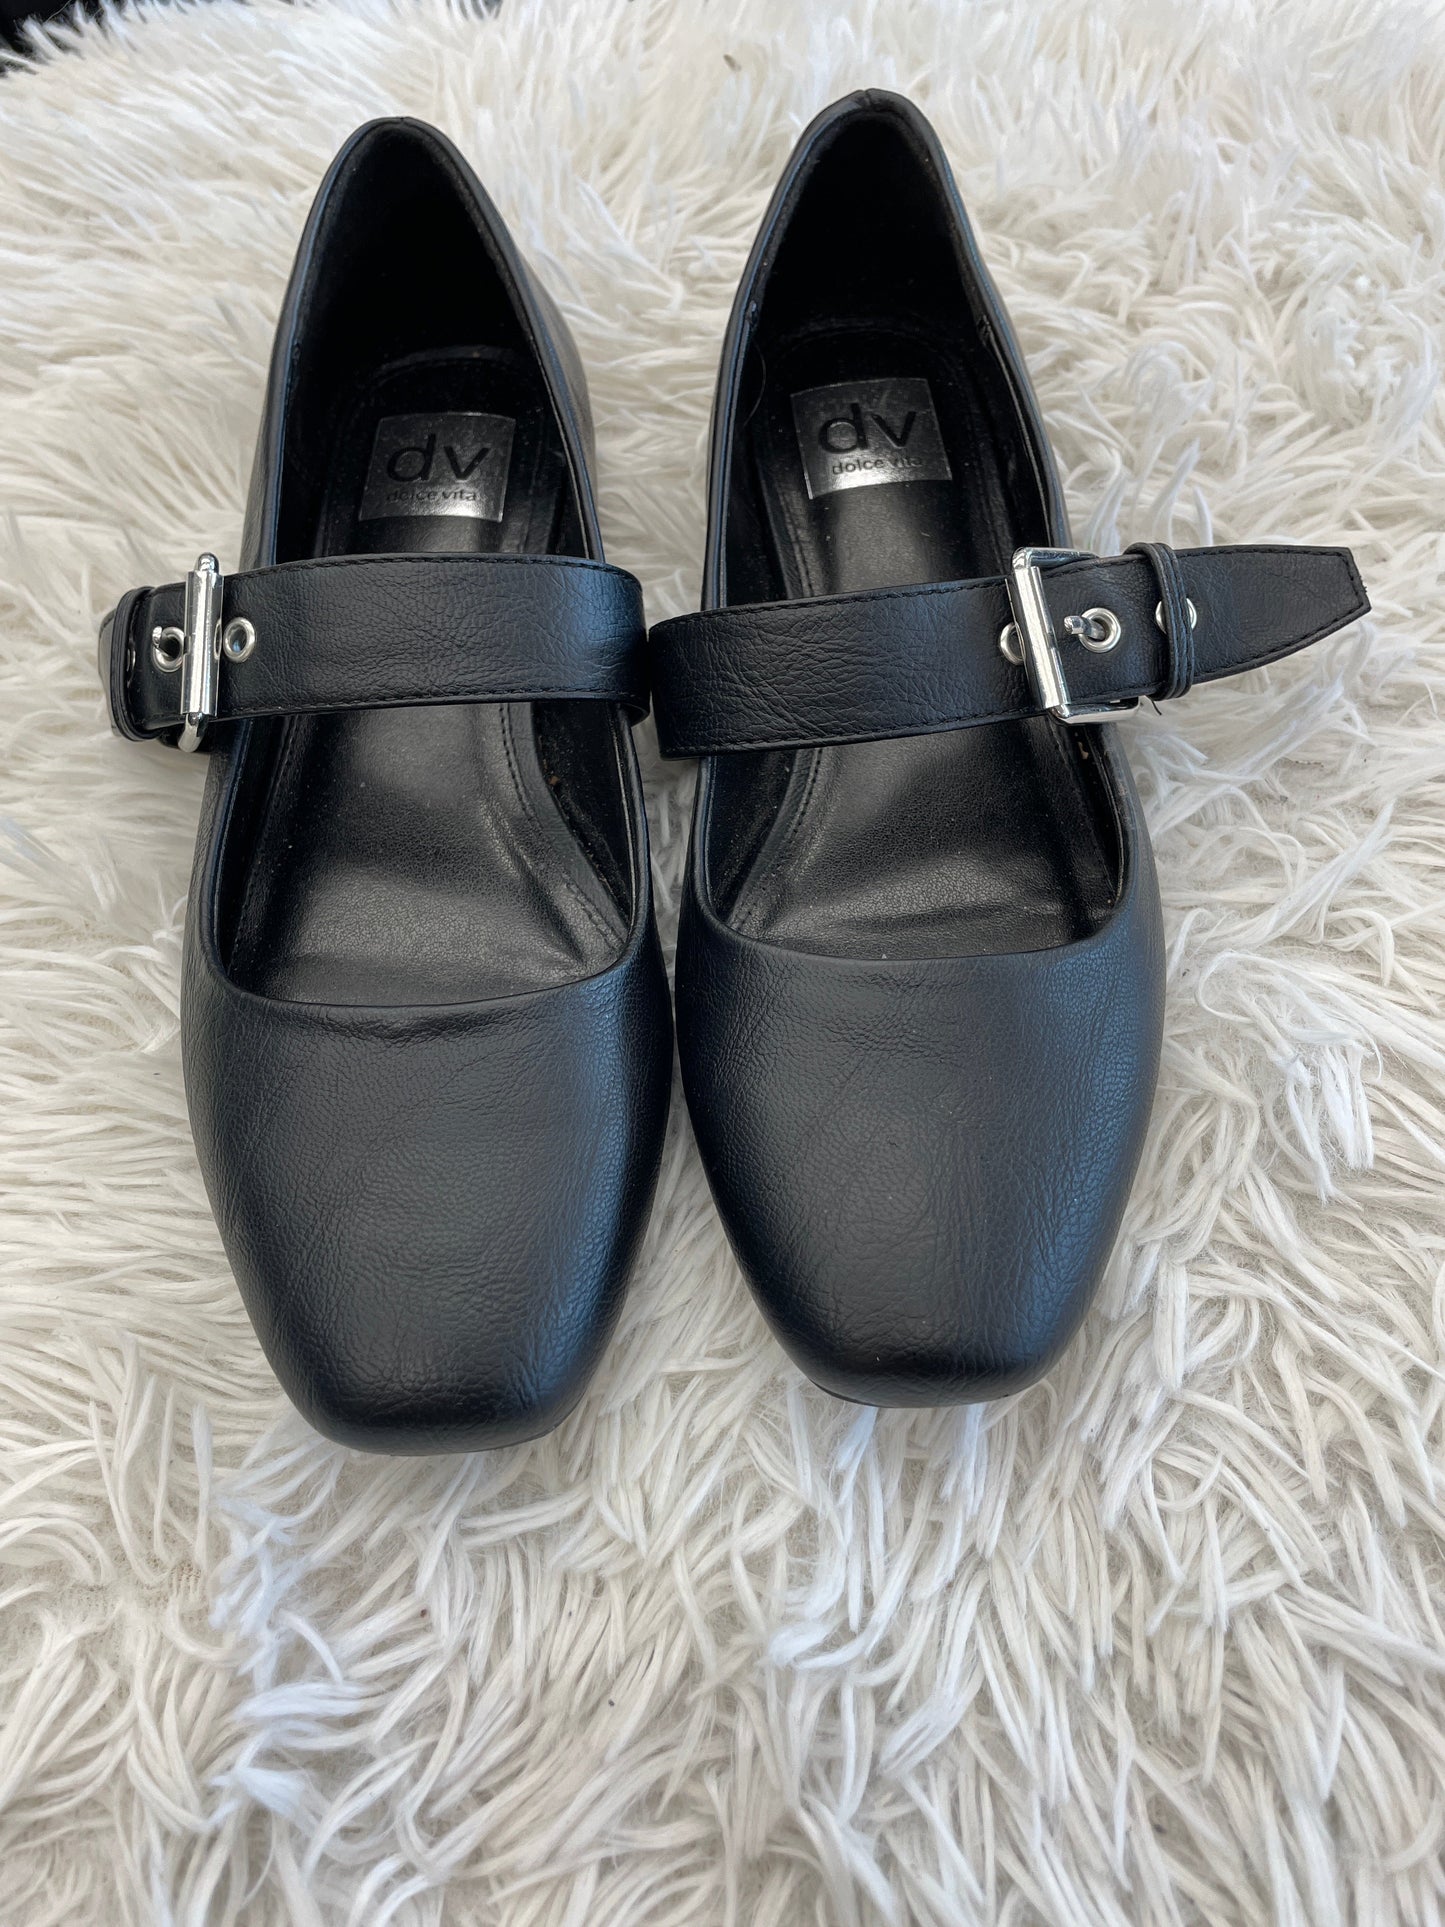 Black Shoes Flats Ballet Dolce Vita, Size 6.5